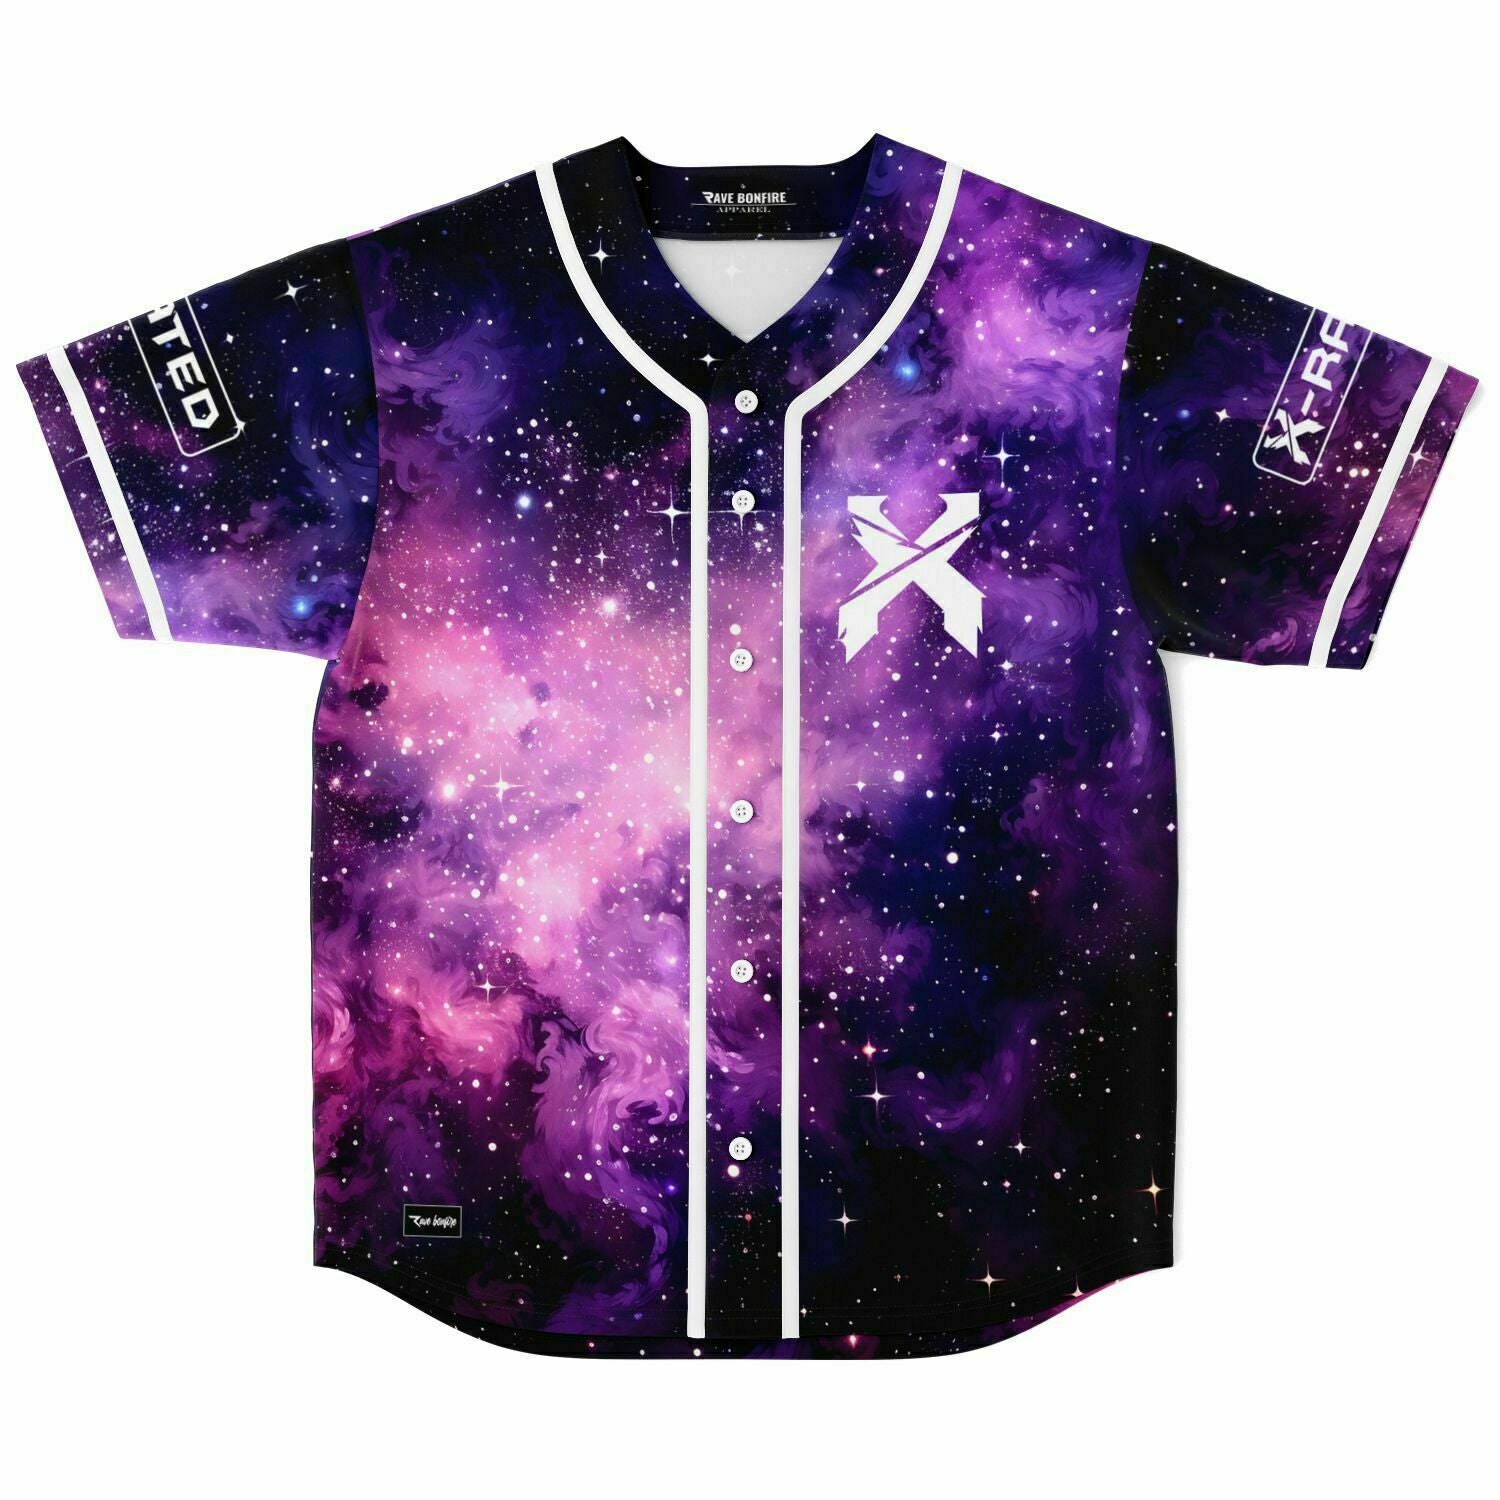 A Waterburry custom Baseball Jersey with a galaxy print on it.